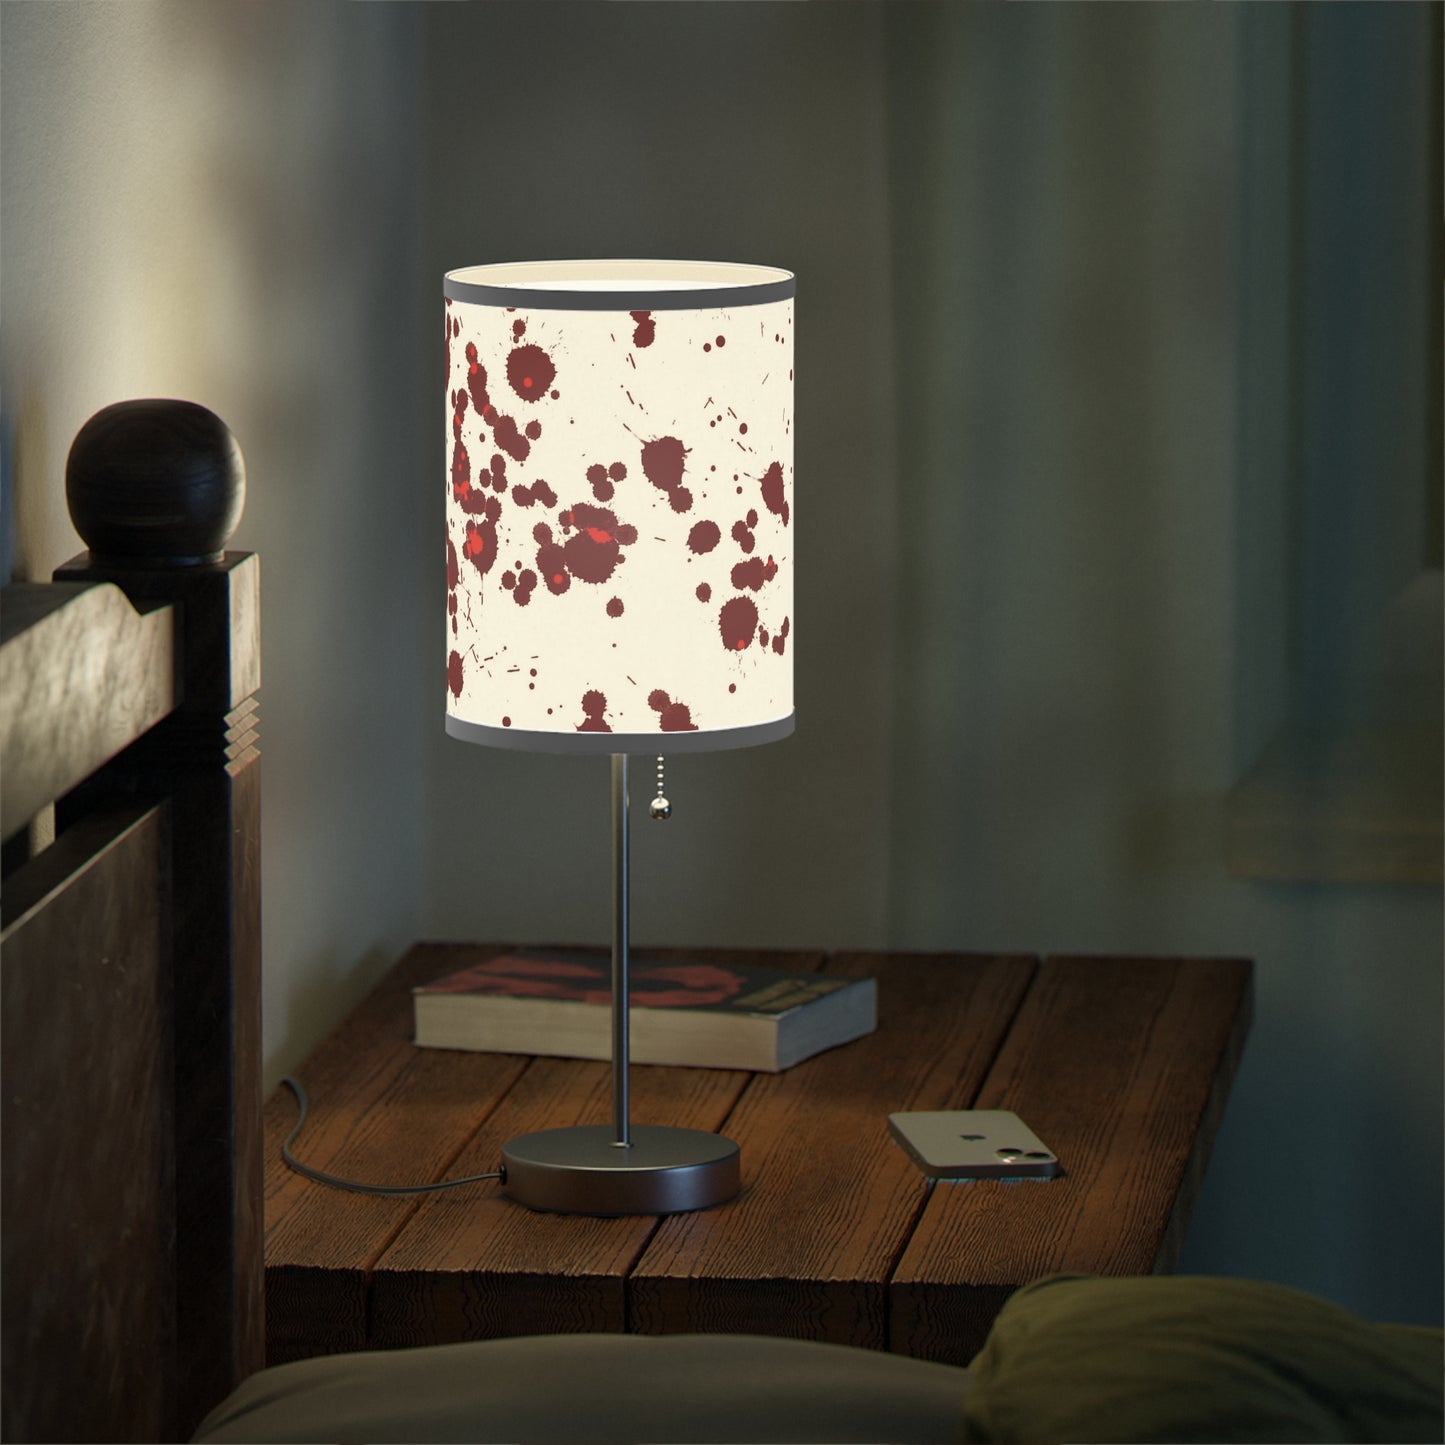 Blood Splatter Lamp on a Stand, US|CA plug